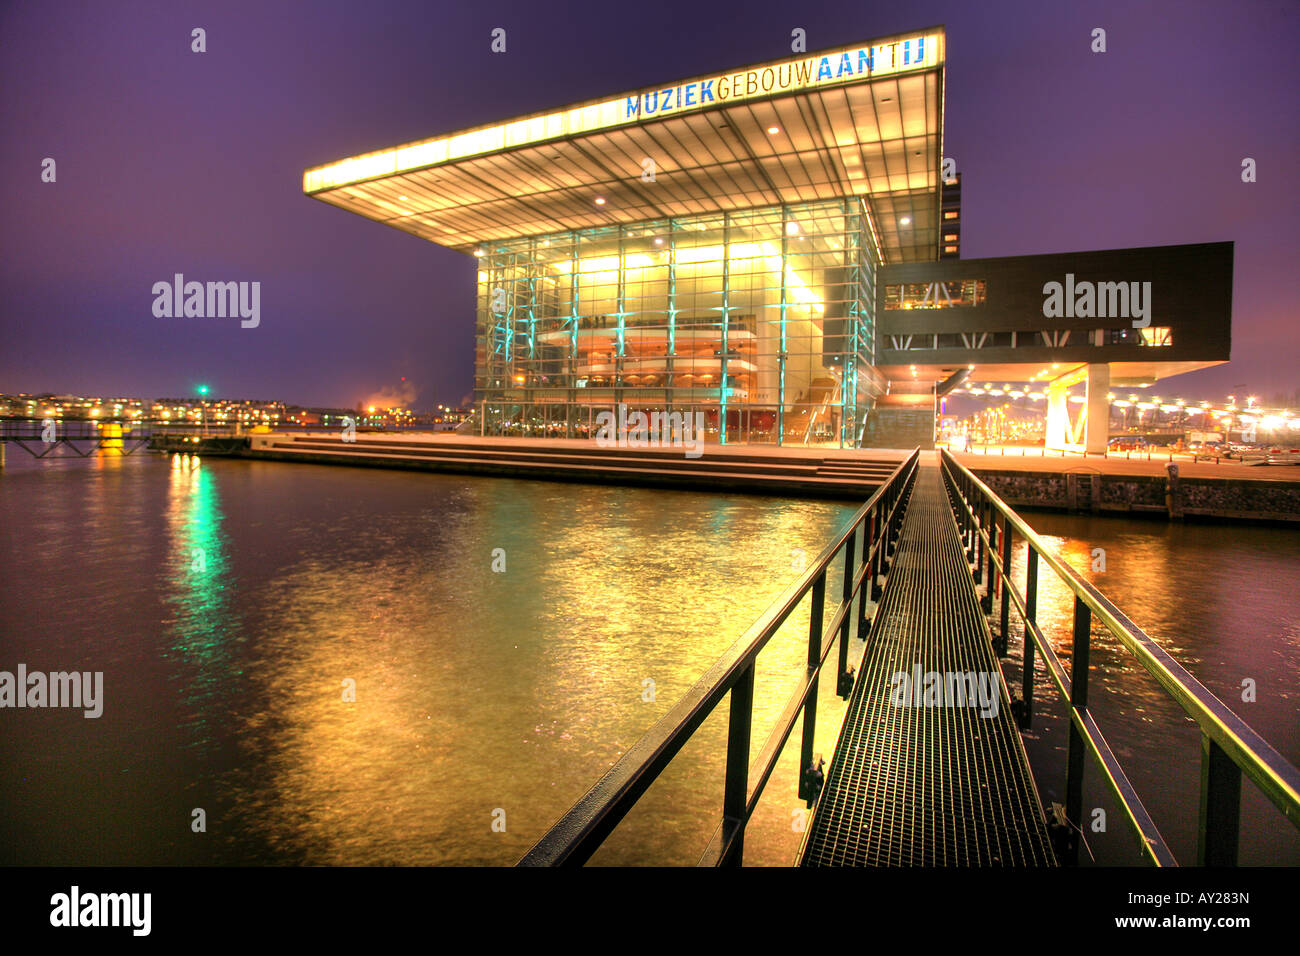 NLD The Netherlands Amsterdam Concerthall Muziekgebouw aan TJI Stock Photo